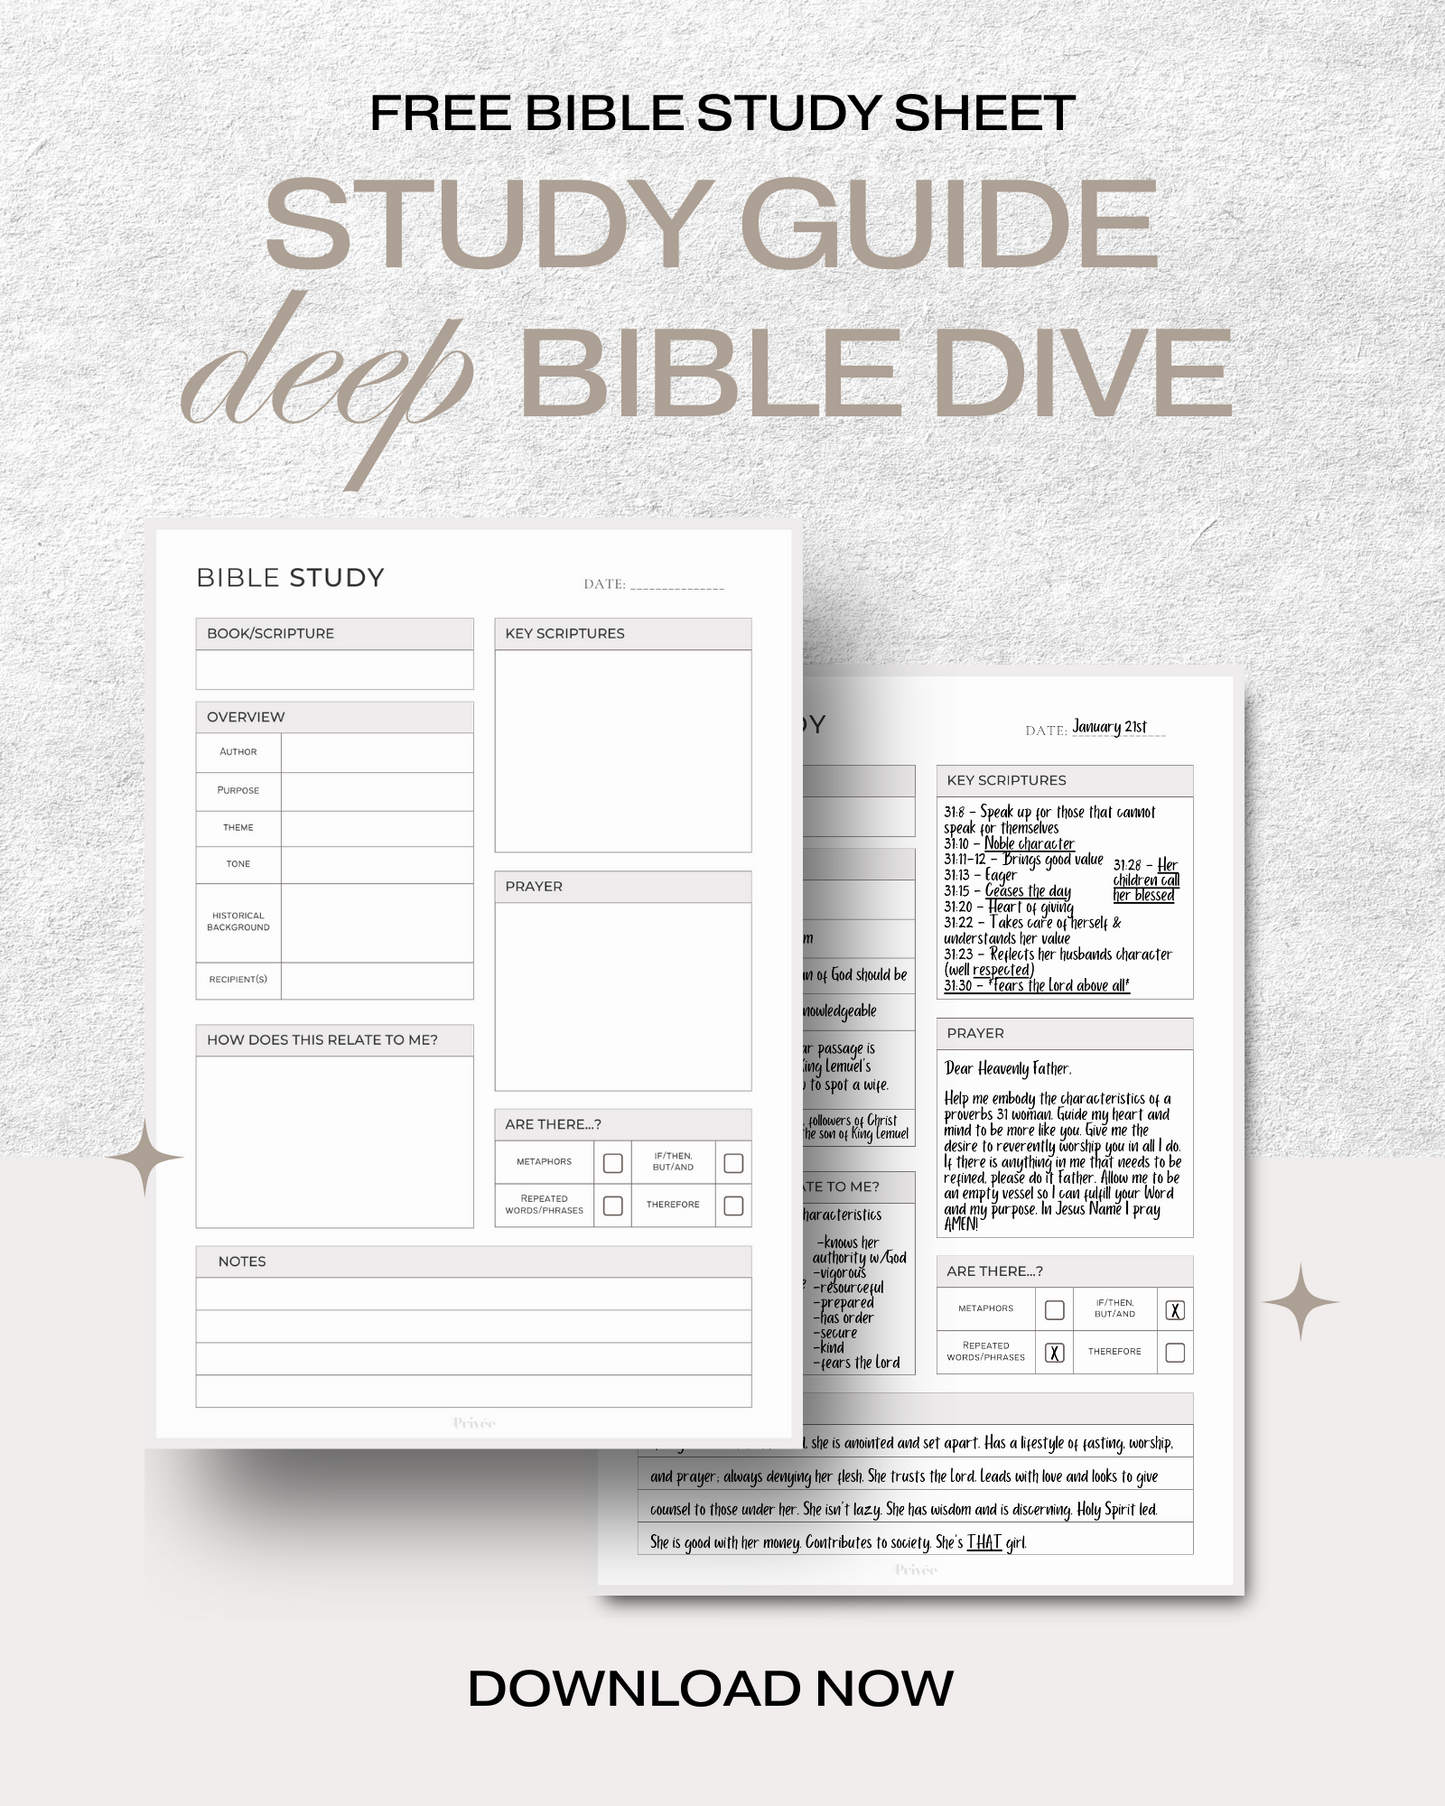 Bible Study Journal: Scripture Notes Bible Study Kuwait